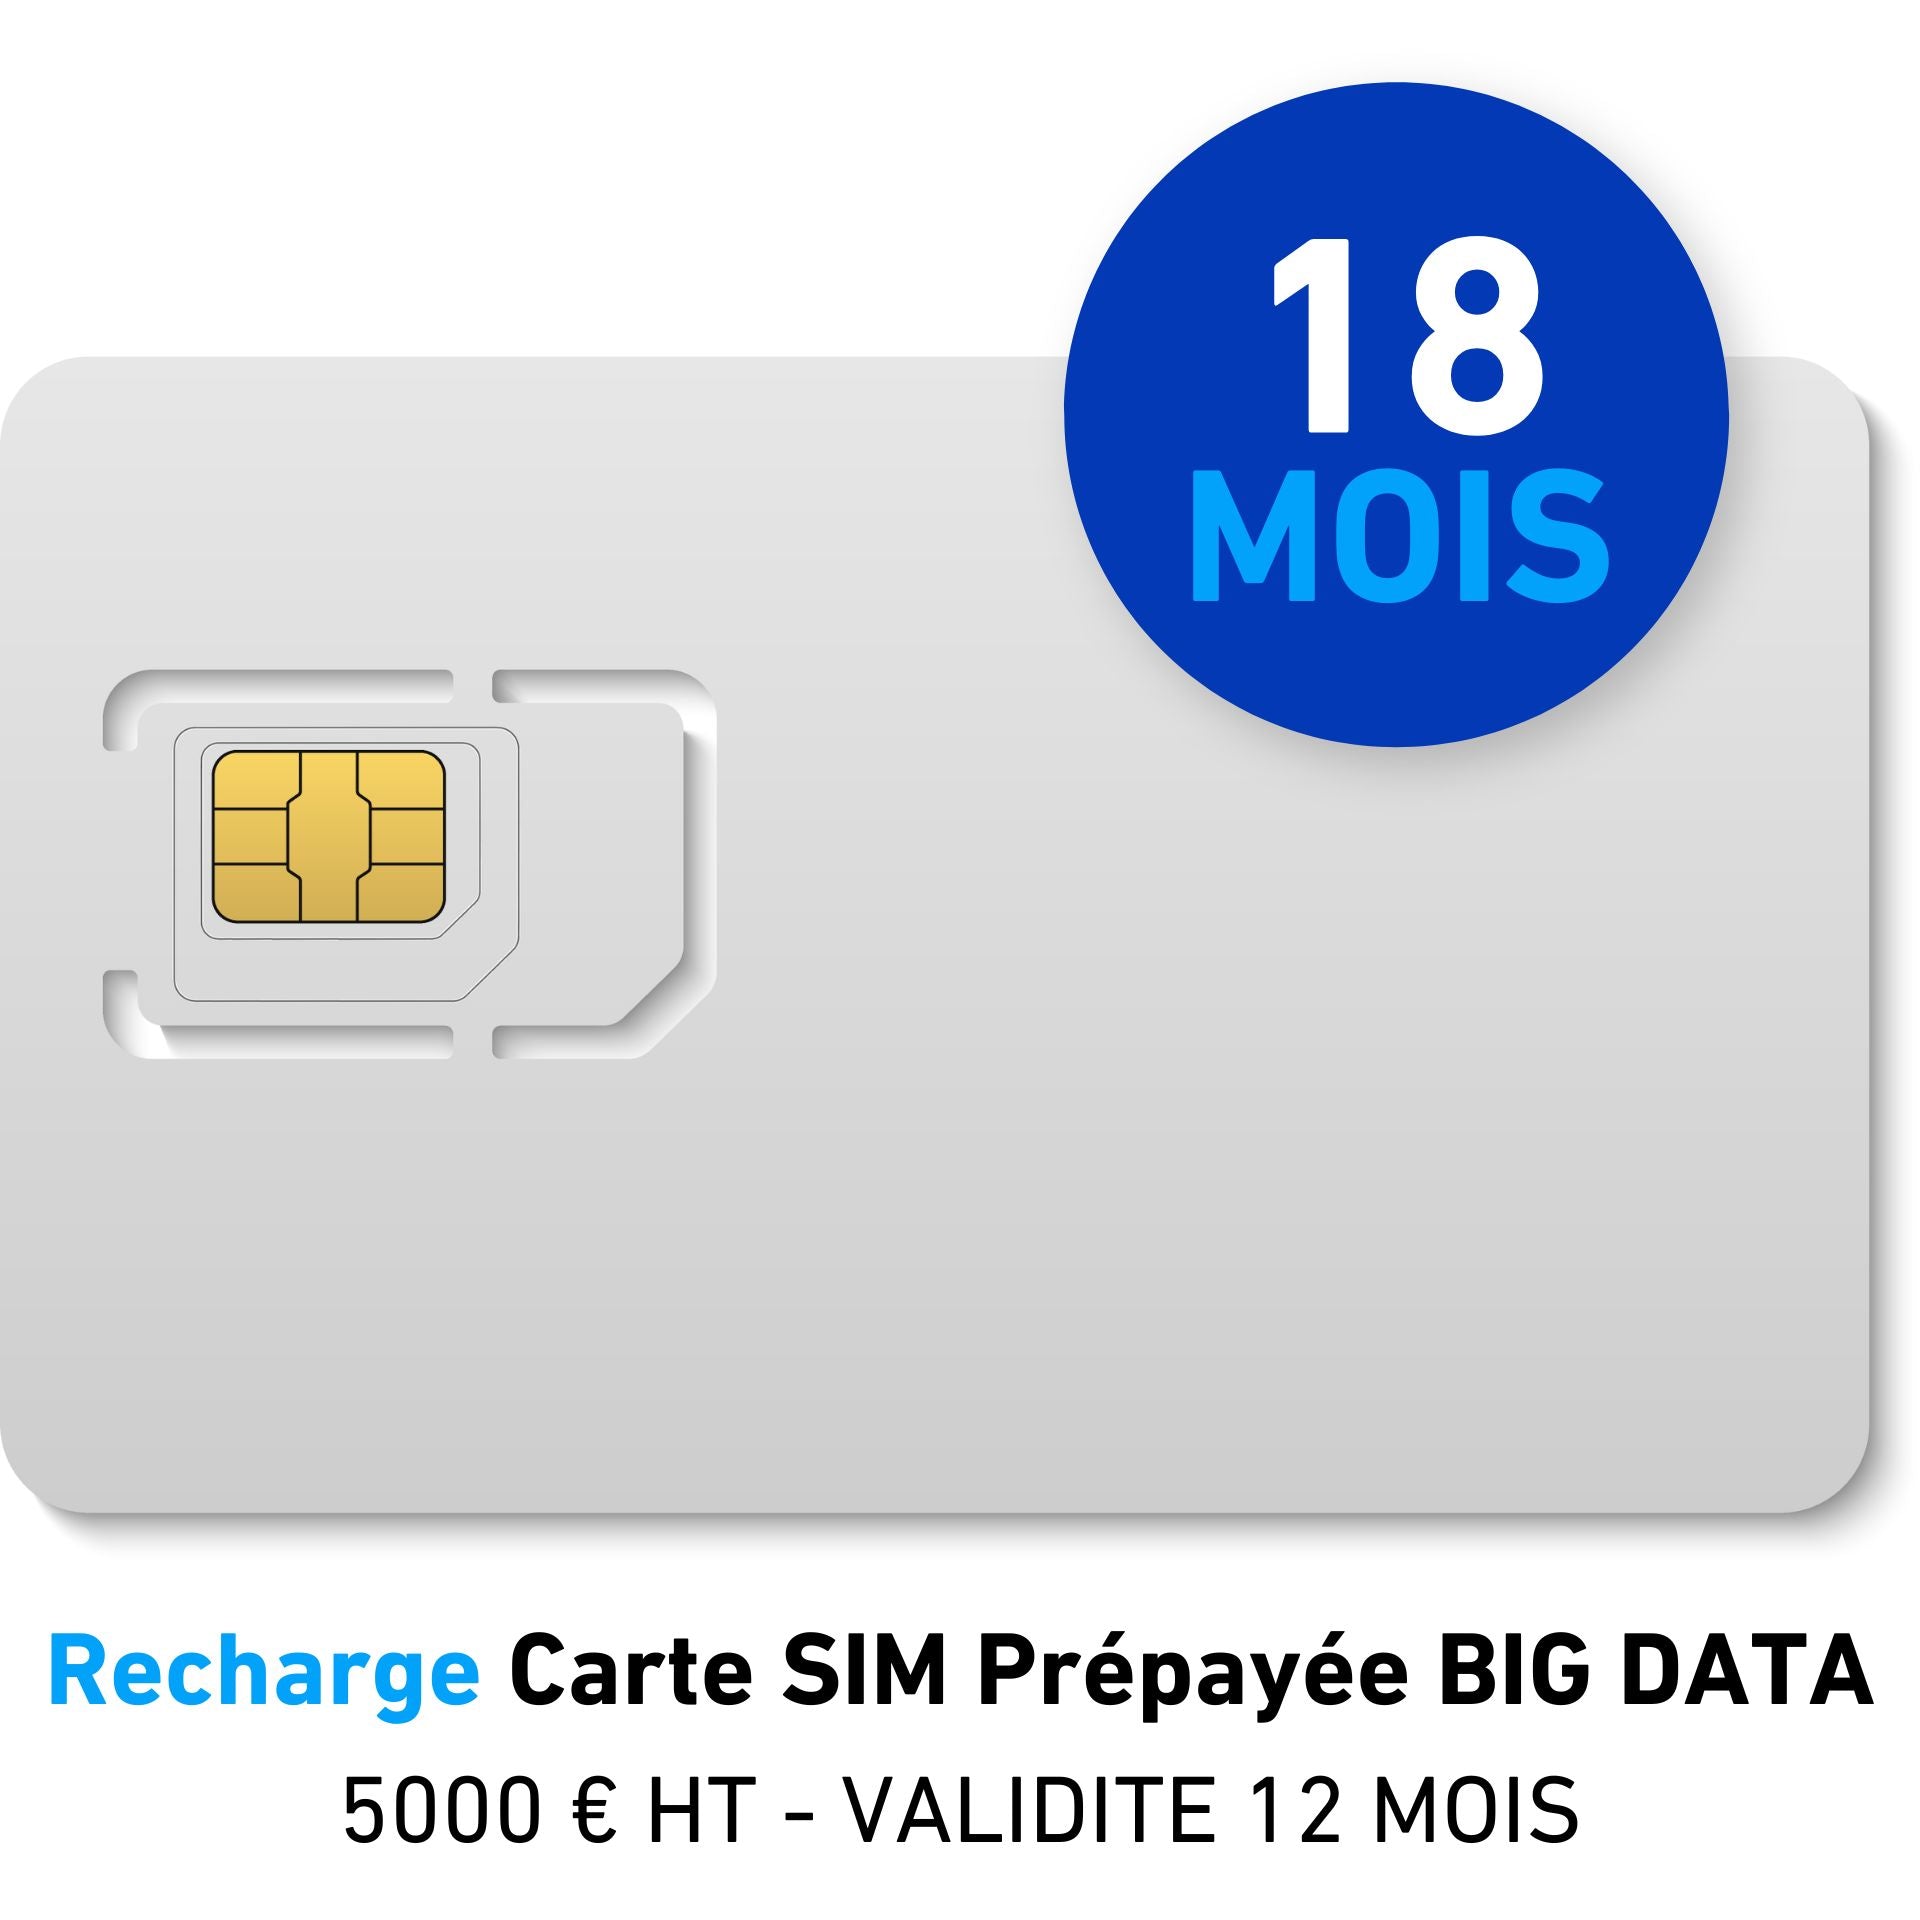 BIG DATA prepaid SIM card refill 5000 € HT - VALIDITY 18 MONTHS